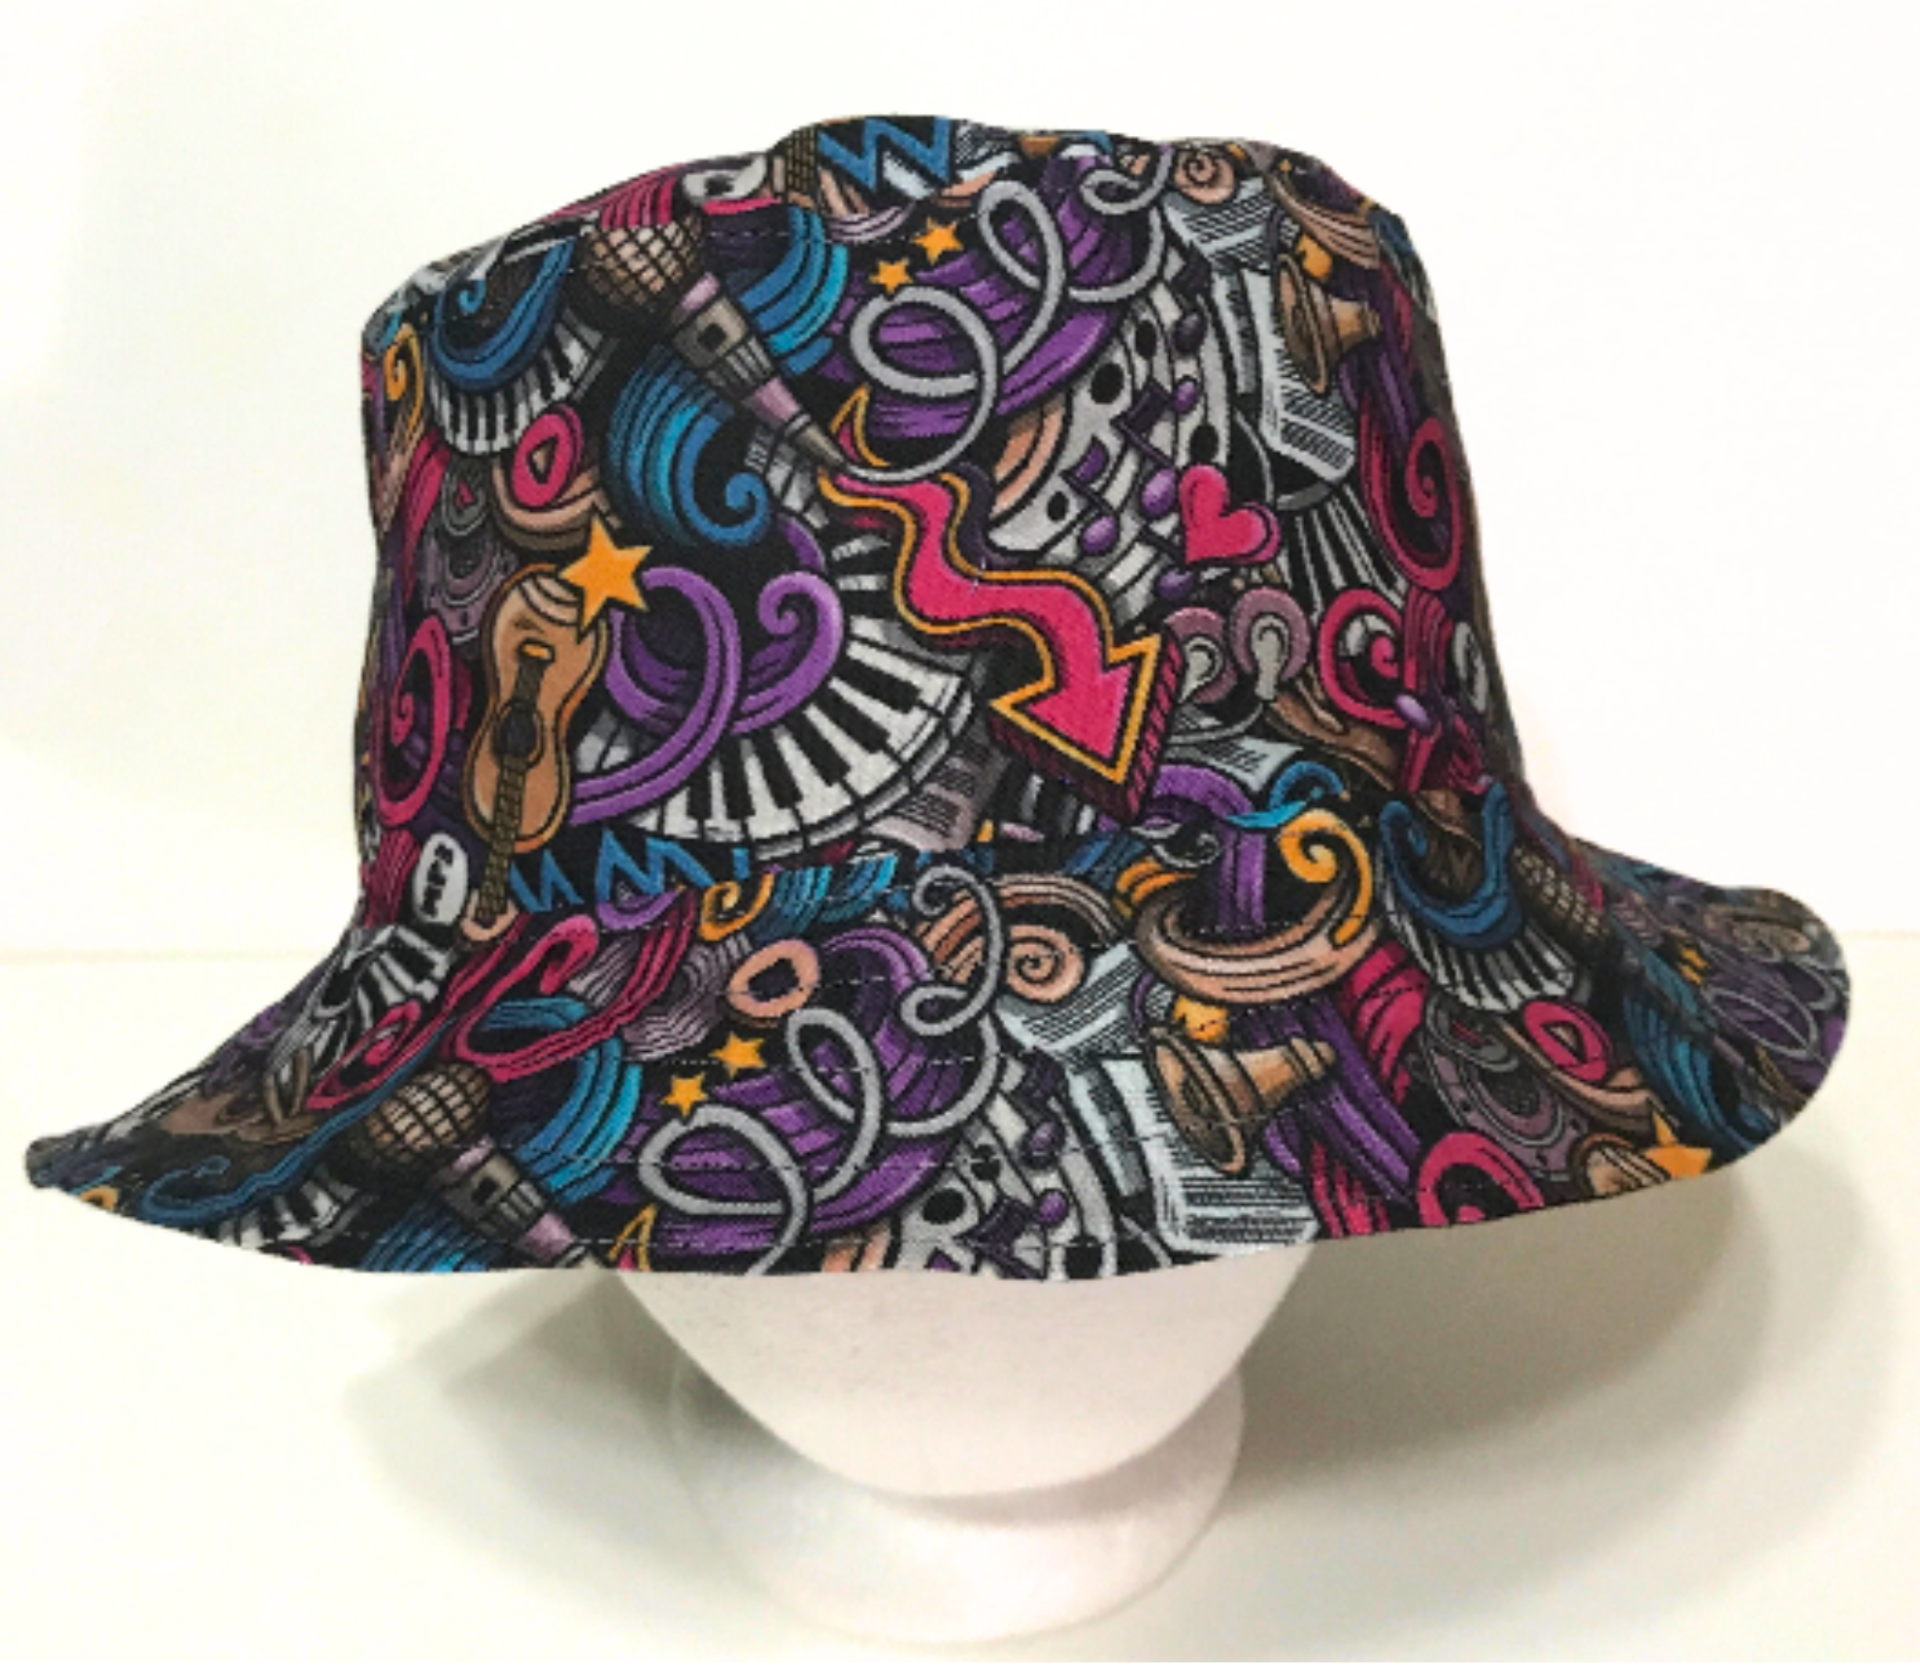 Music Theme Bucket Hat, Musical Notes, Doodle Style Print, Reversible, S-XXL, summer hat, ponytail hat,sun hat, floppy hat, concert hat